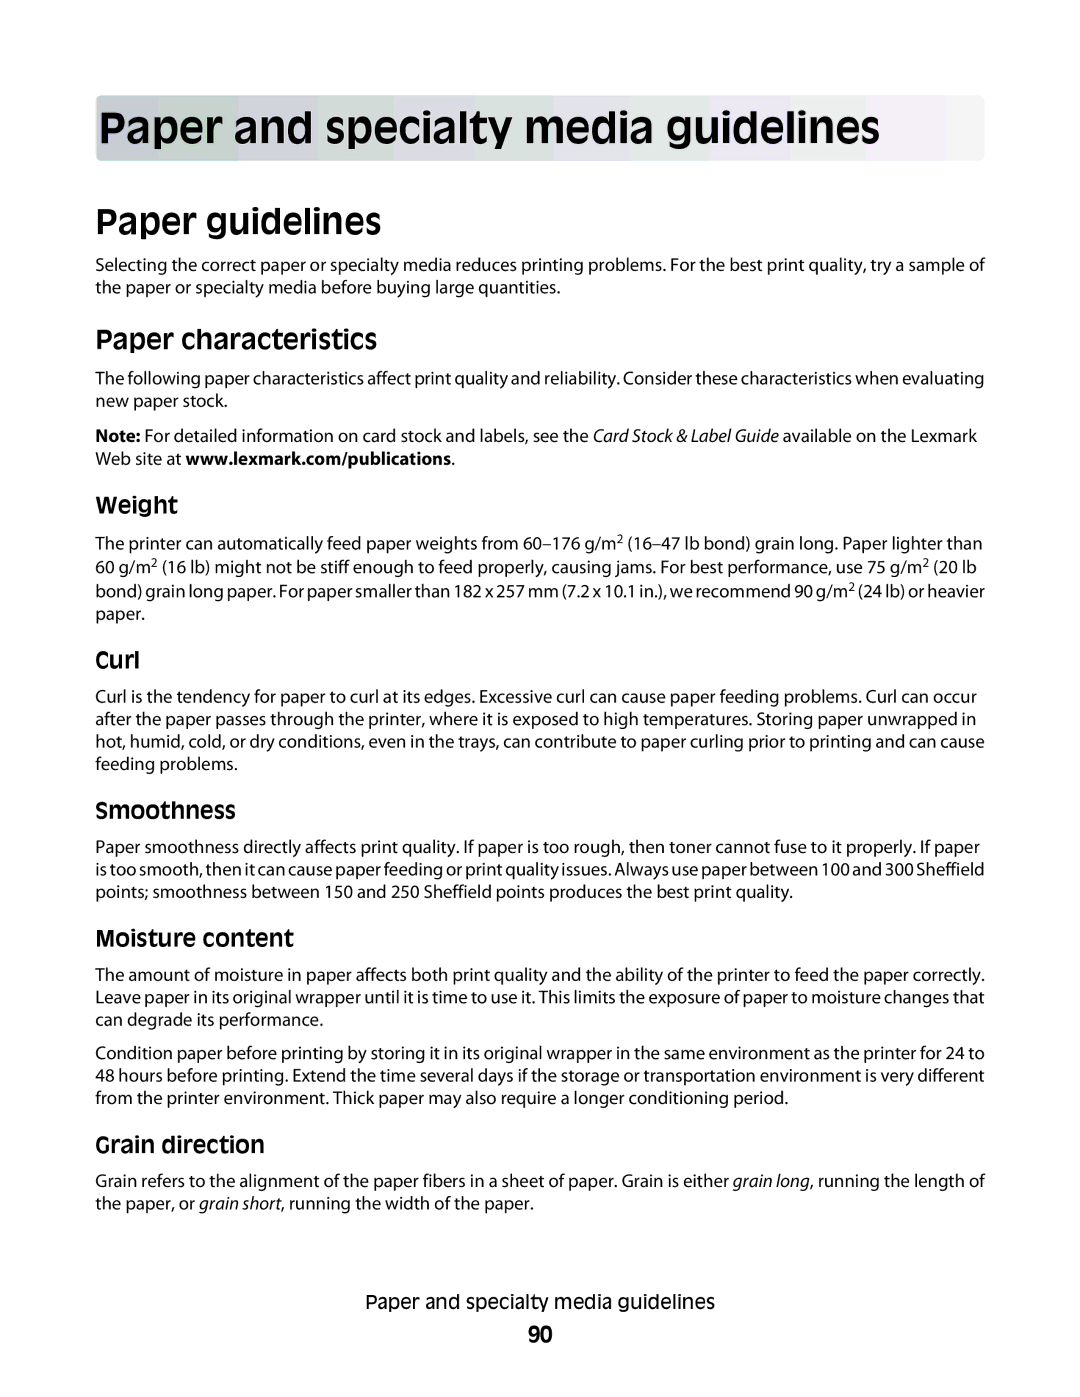 Lexmark 431, X466de, X464de, 63W, 636, g02, g12 Paper and specialty media guidelines, Paper guidelines, Paper characteristics 